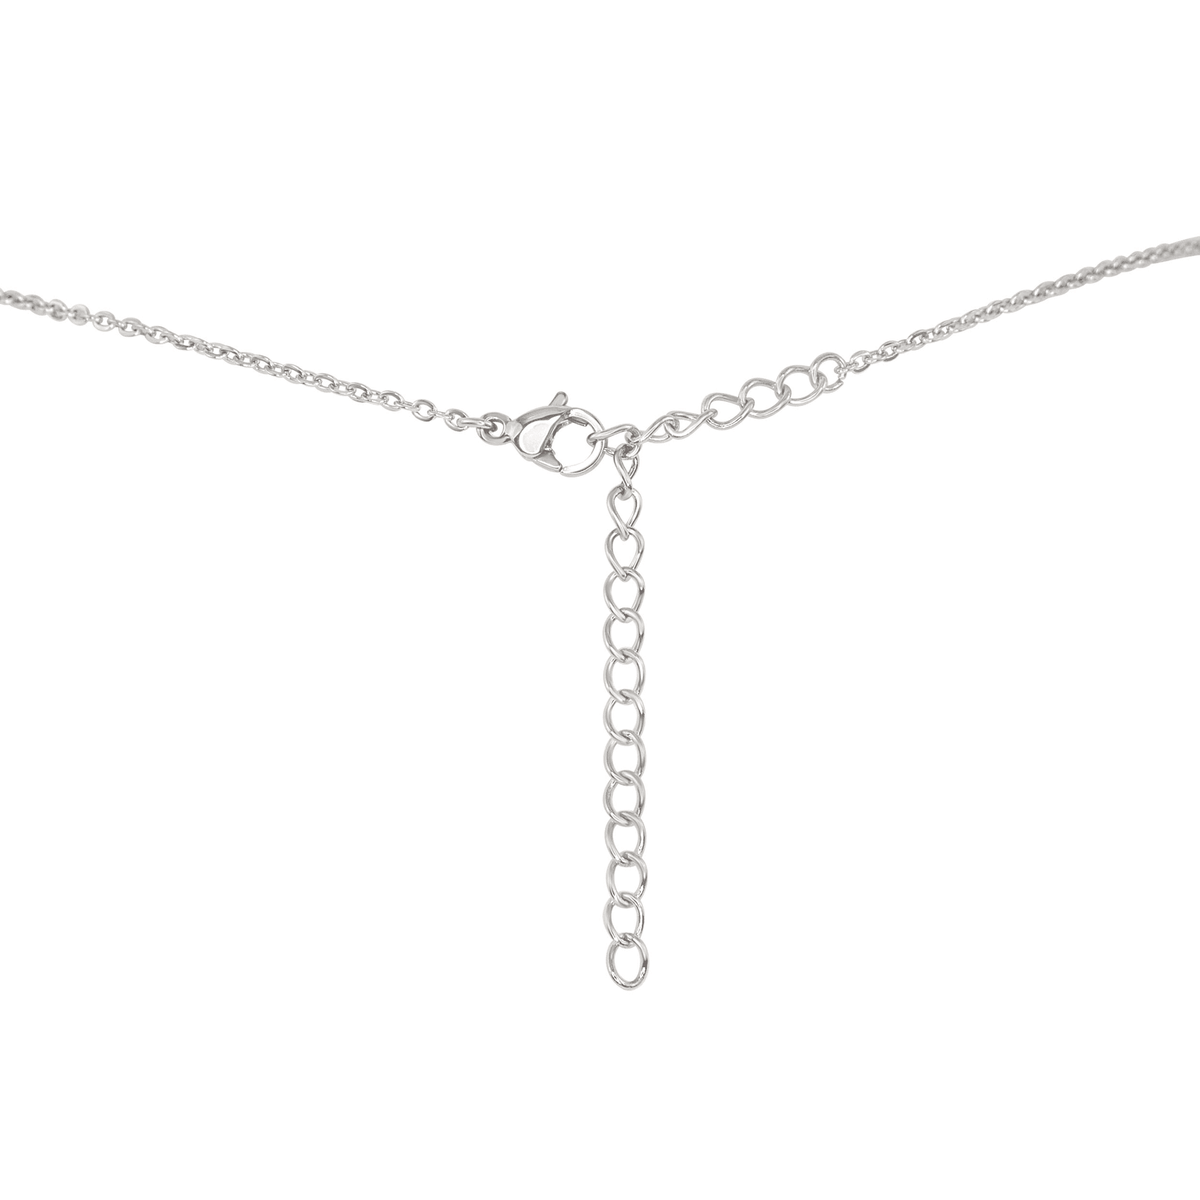 White Moonstone Beaded Chain Choker Necklace - White Moonstone Beaded Chain Choker Necklace - 14k Gold Fill - Luna Tide Handmade Crystal Jewellery